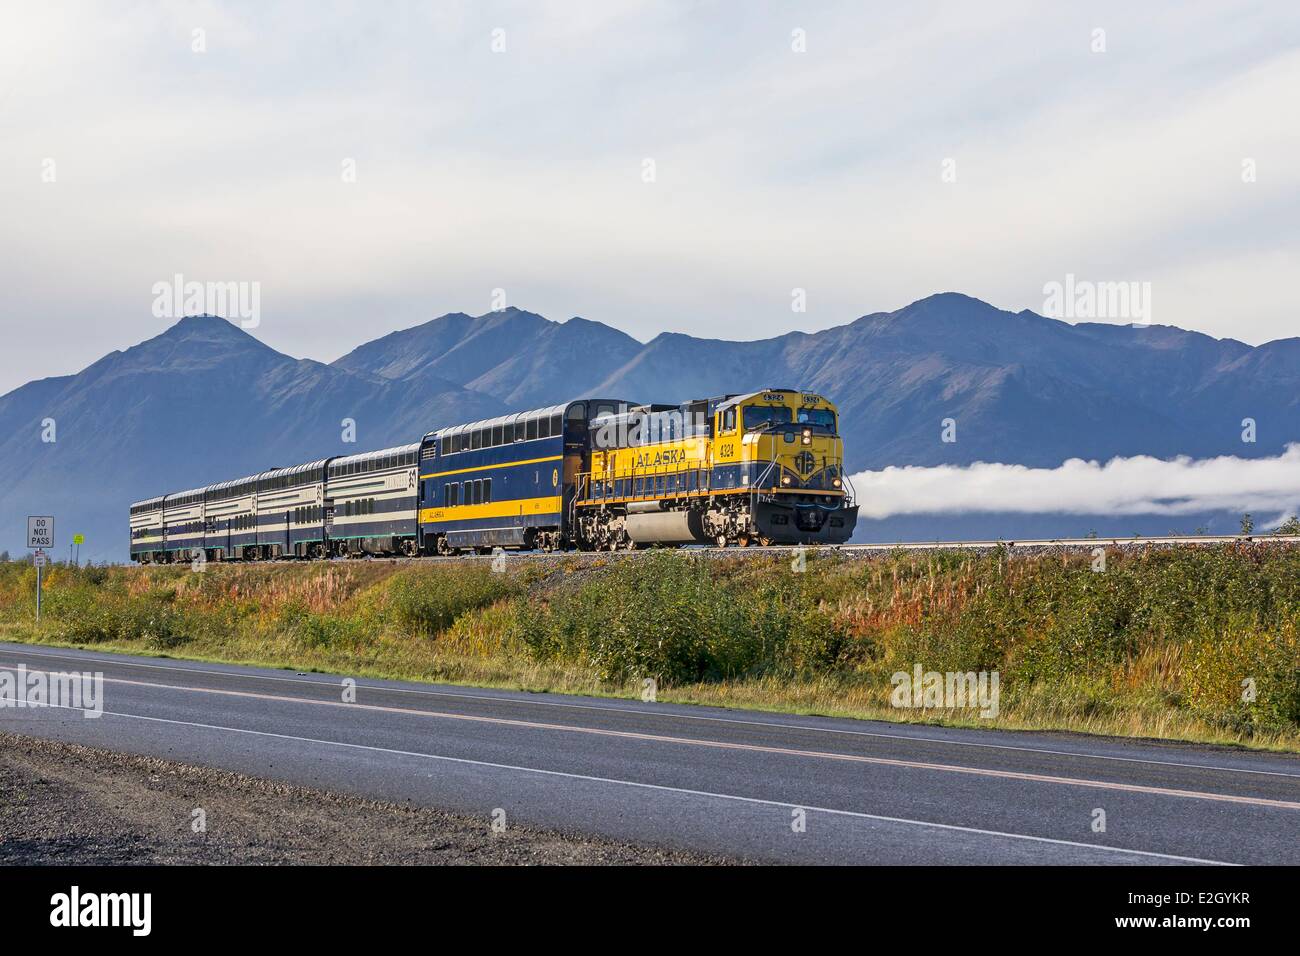 United States Alaska Anchorage train of Alaska railways Stock Photo